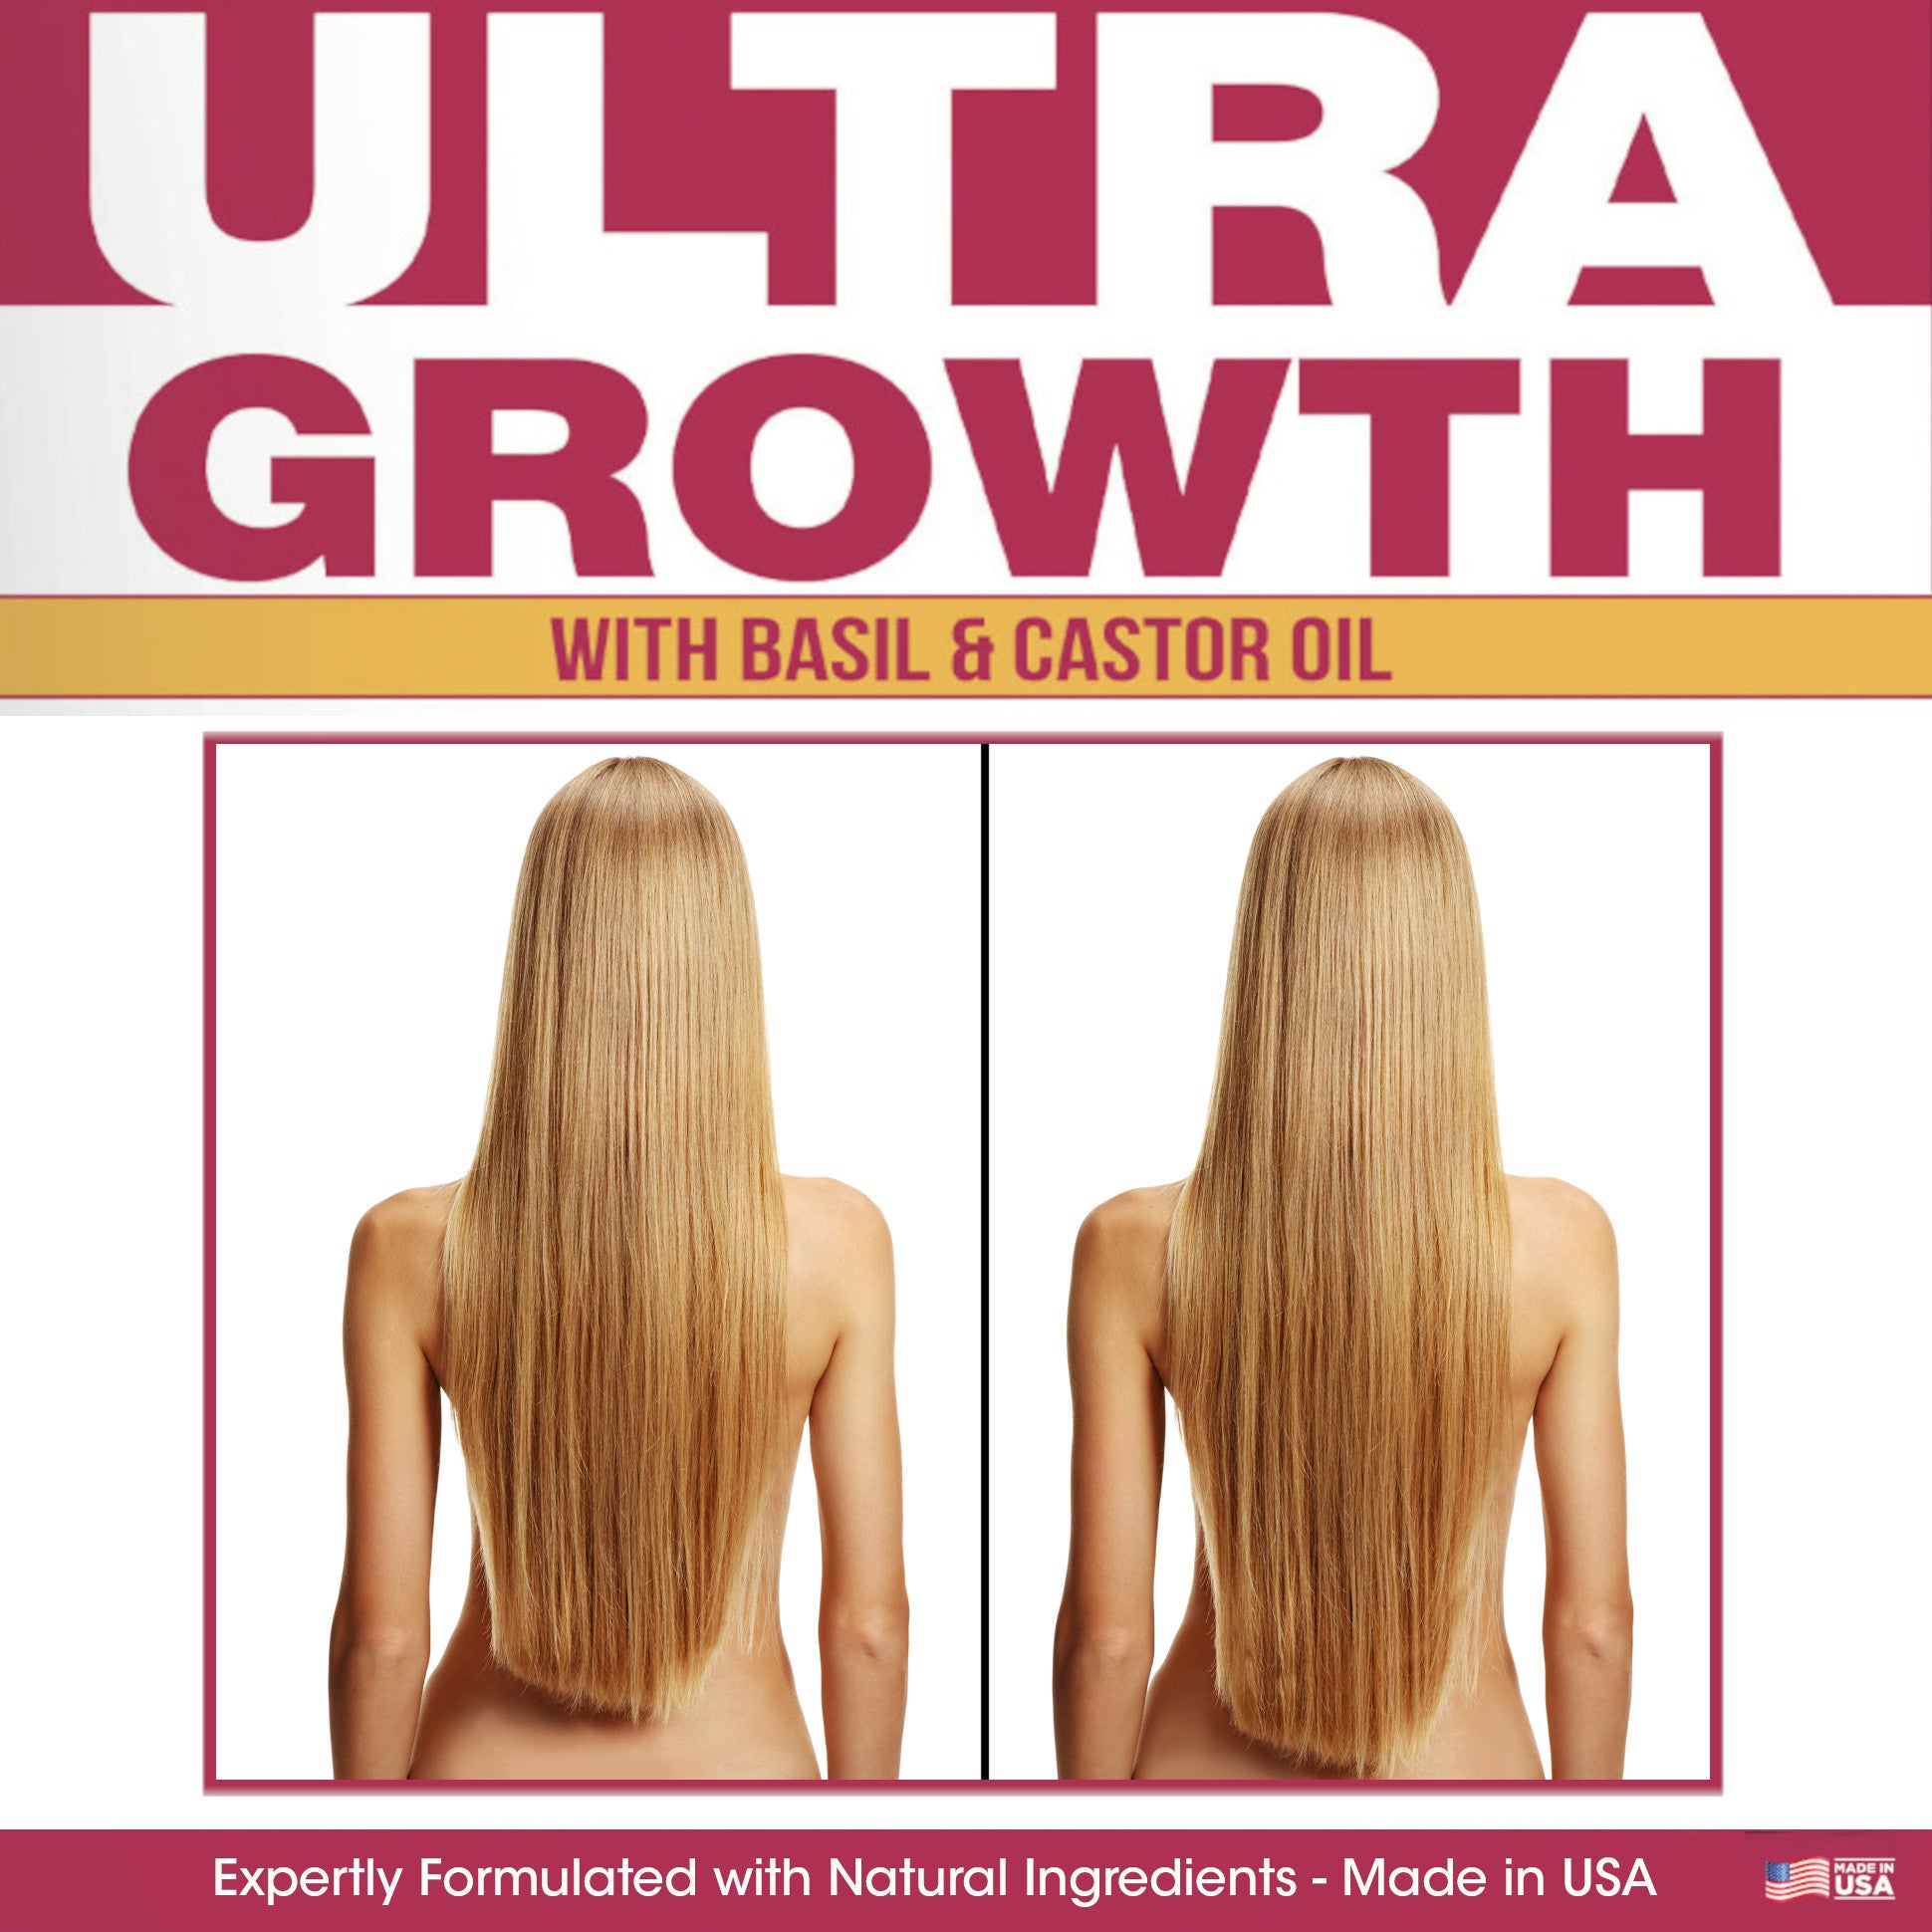 Difeel Ultra Growth Basil & Castor Hair Oil Leave in Conditioning Spray 6 oz.